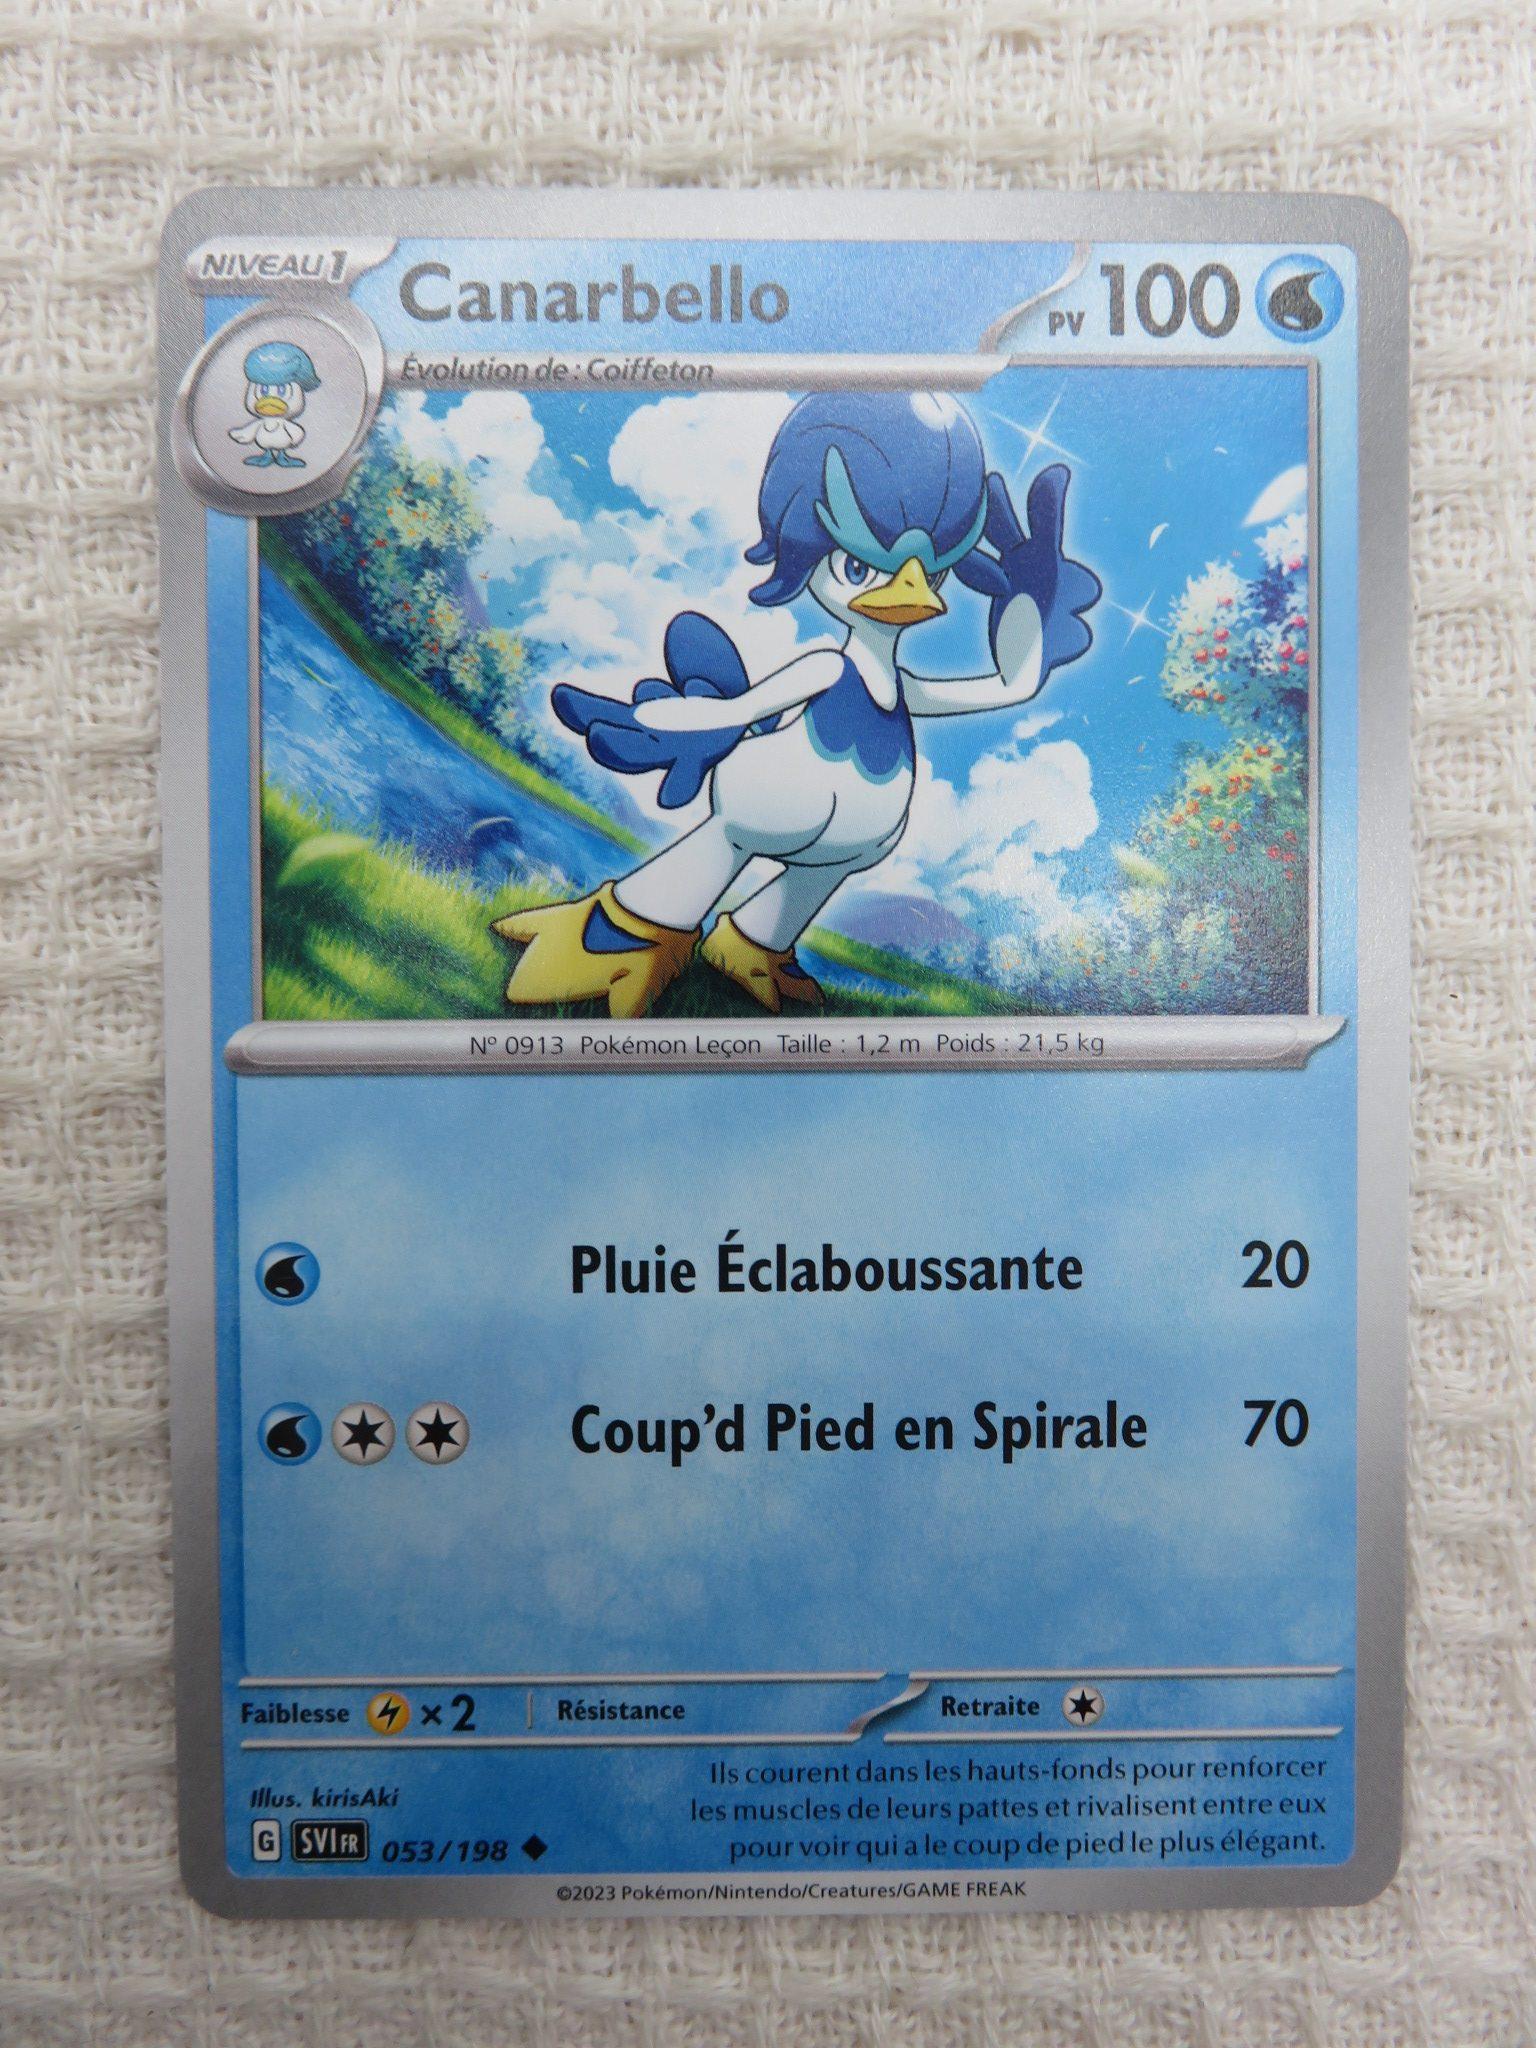 Carte Pokémon Canarbello 053/198 Ecarlate et Violet